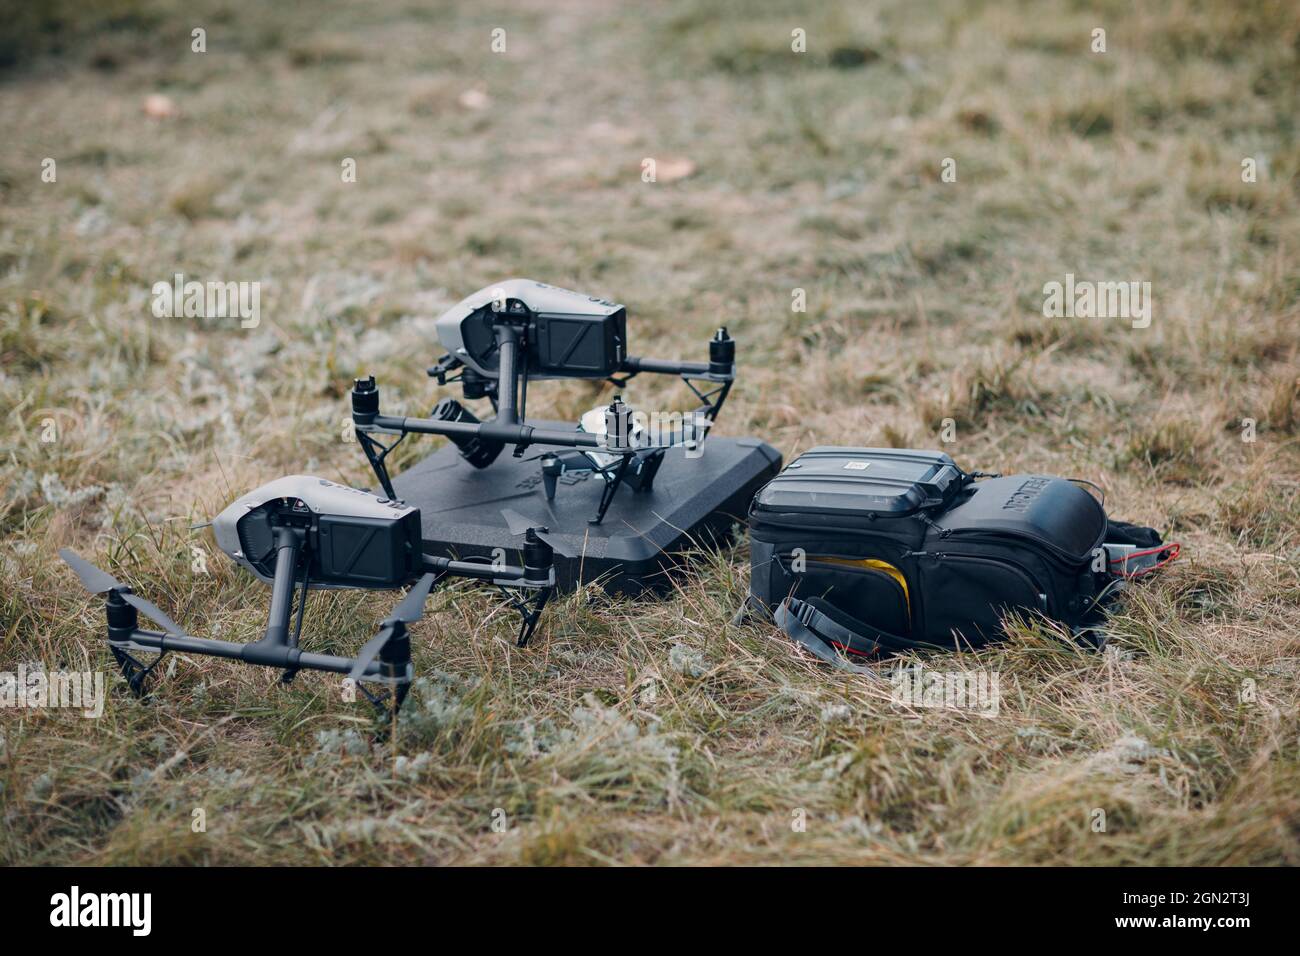 New York, USA - 18. SEPTEMBER 2021: DJI Inspire 2 Quadcopter-Drohne vor dem Flug und den Dreharbeiten Stockfoto